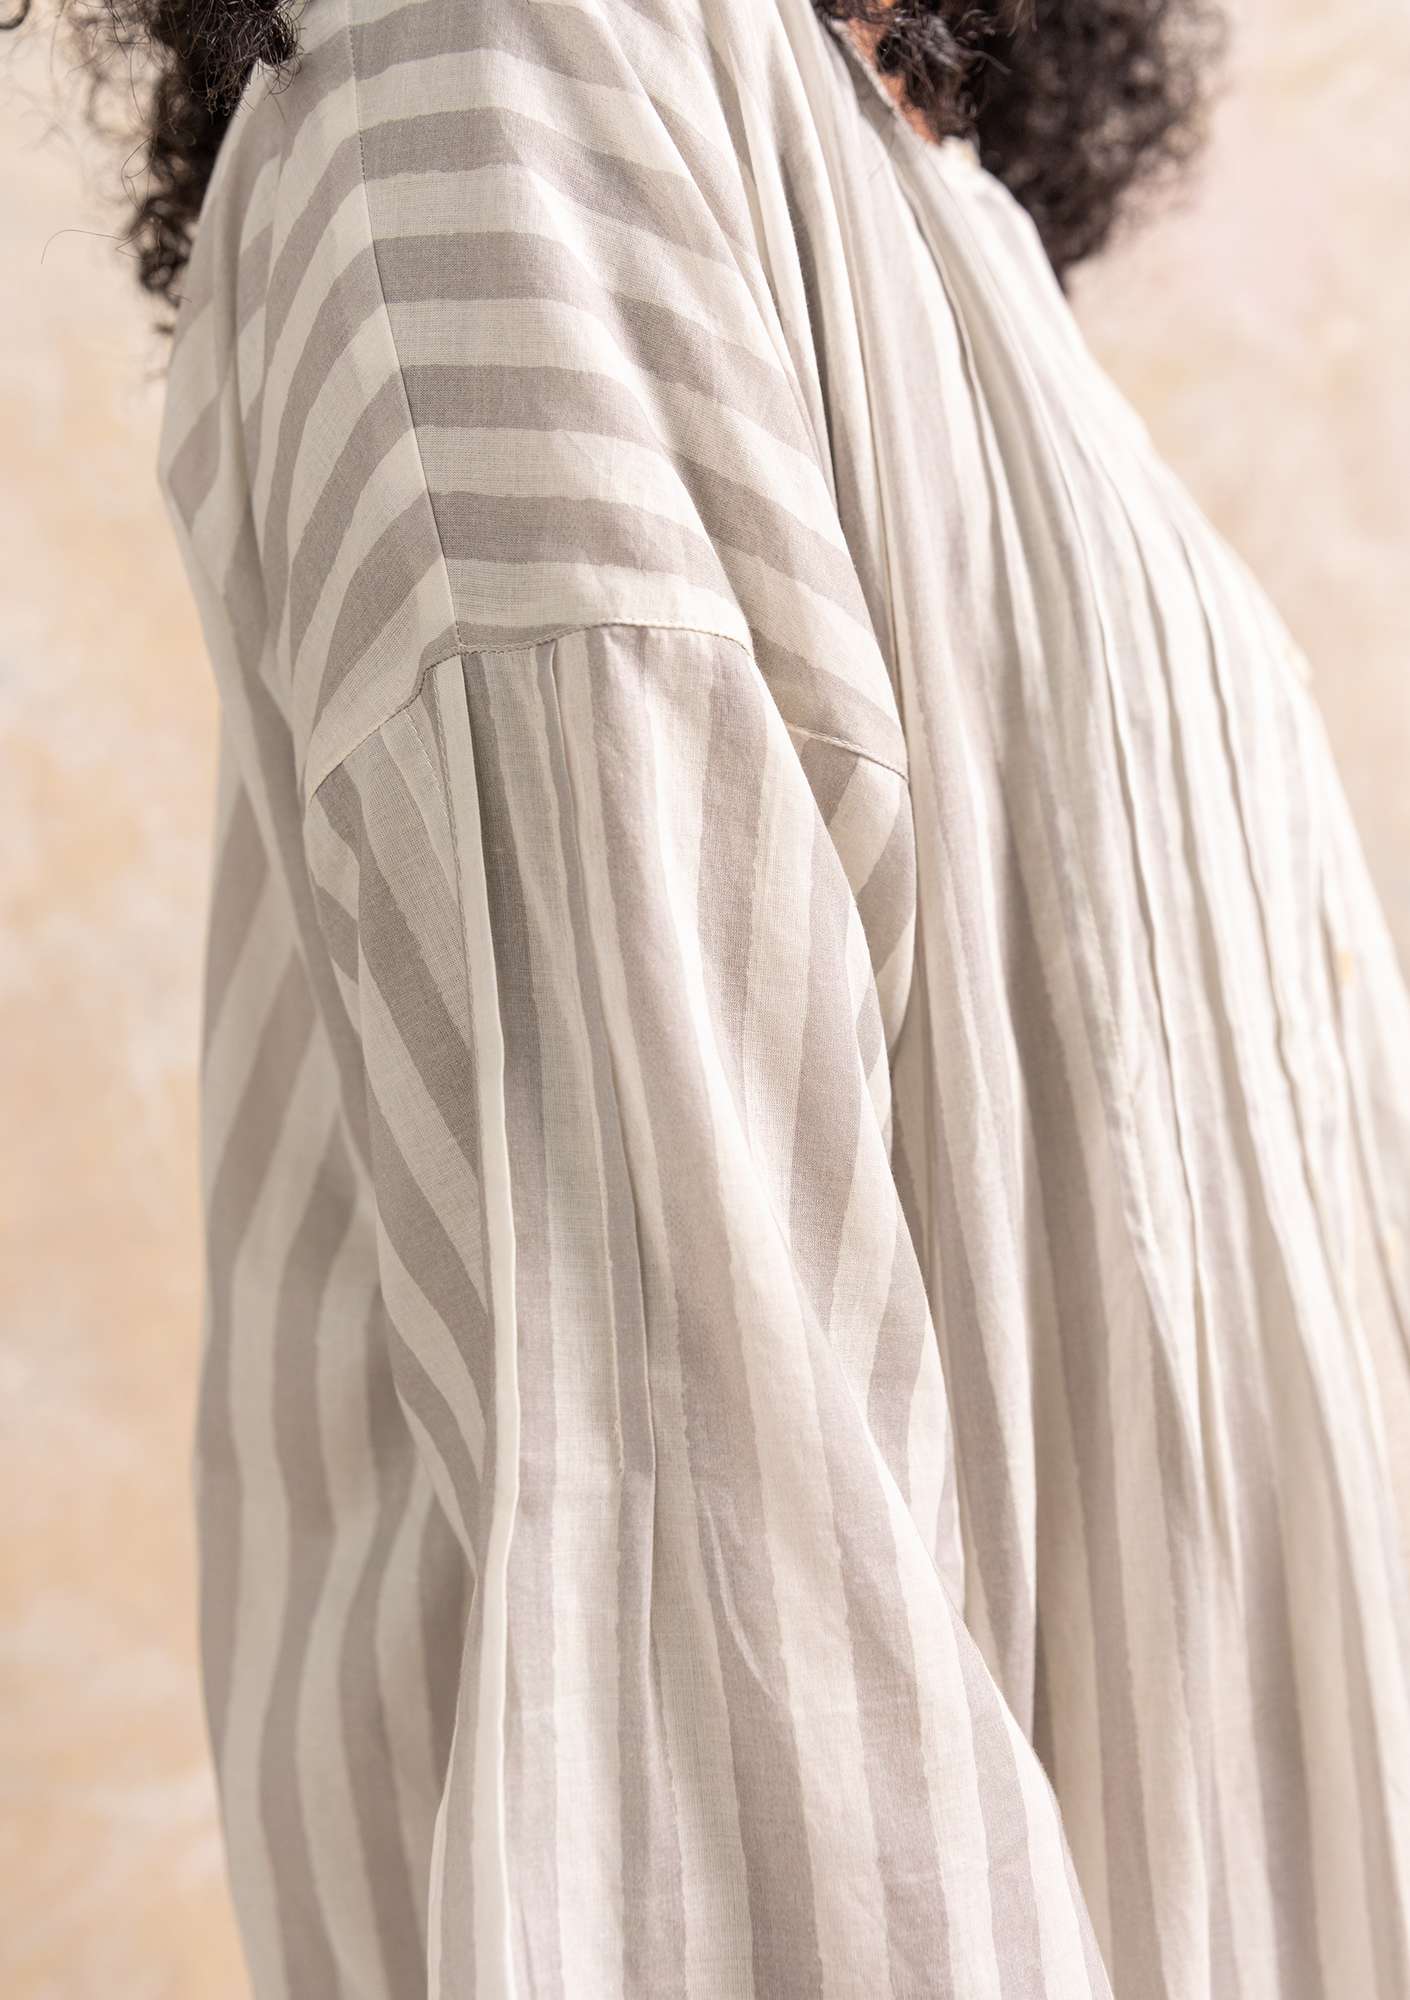 “Serafina” woven organic cotton dress elephant grey/patterned